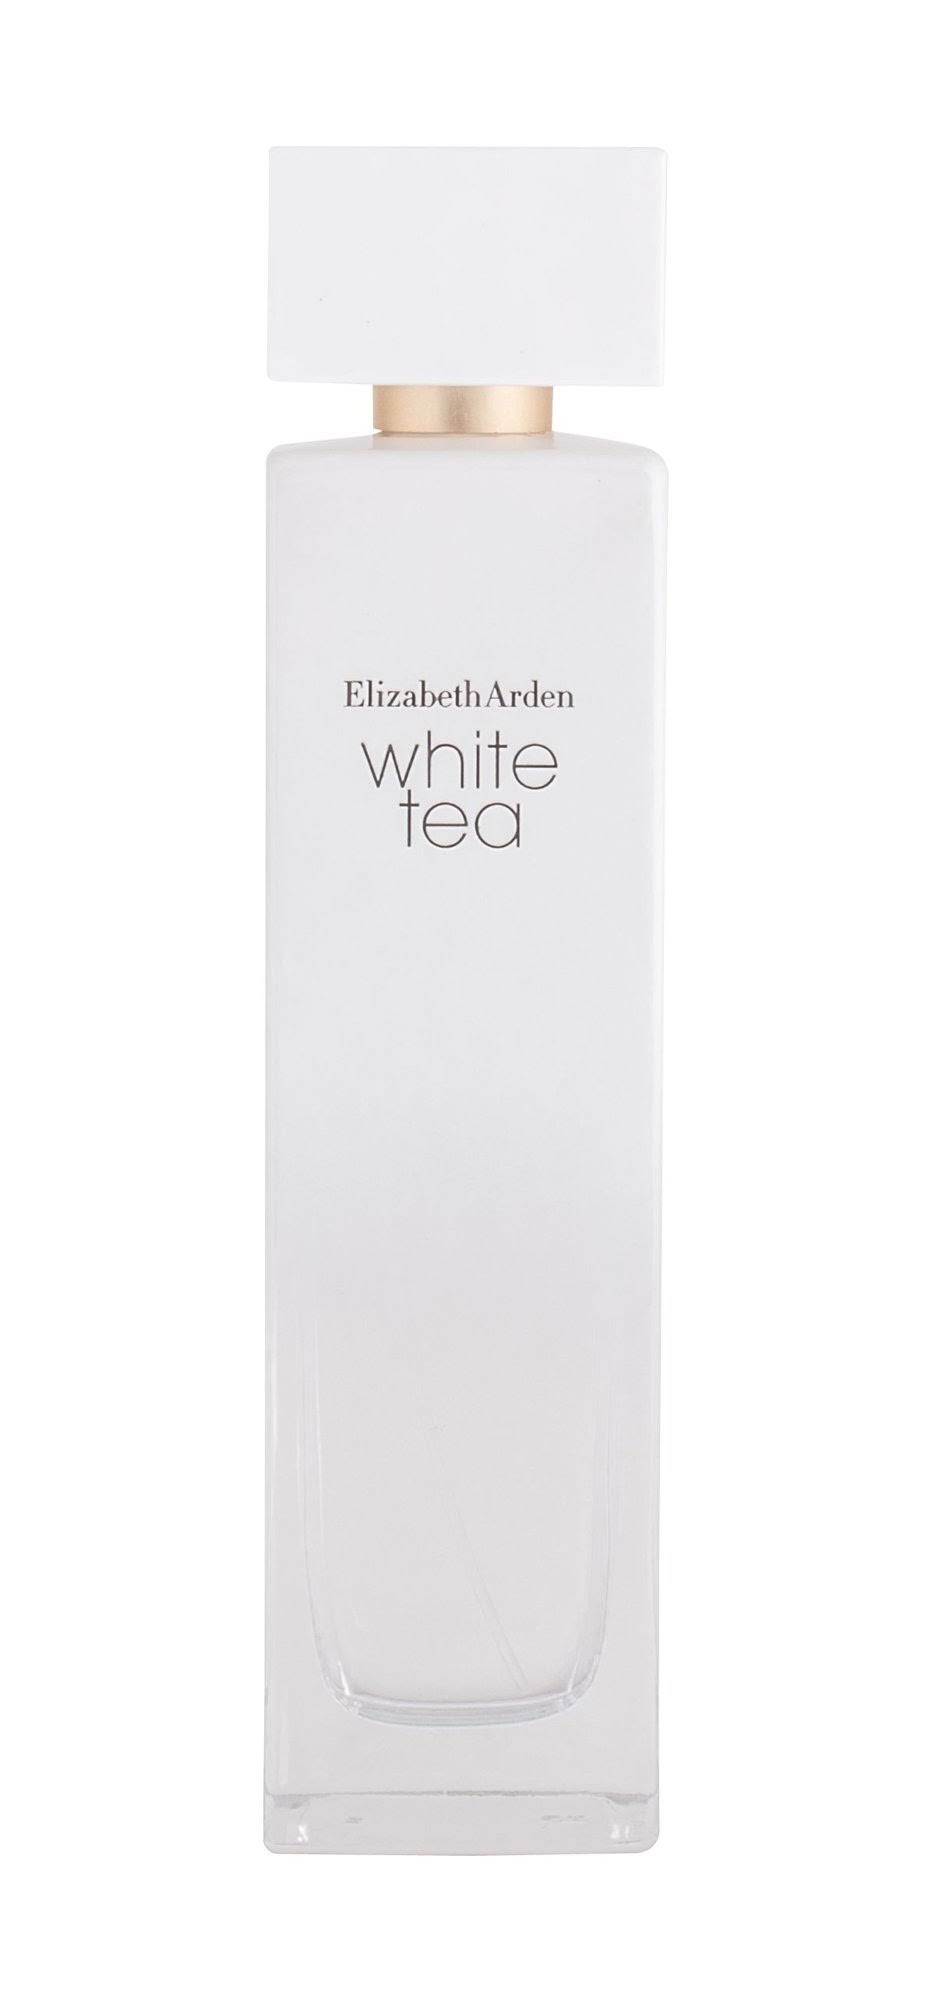 Elisabeth Arden White Tea for Women Eau De Toilette Spray